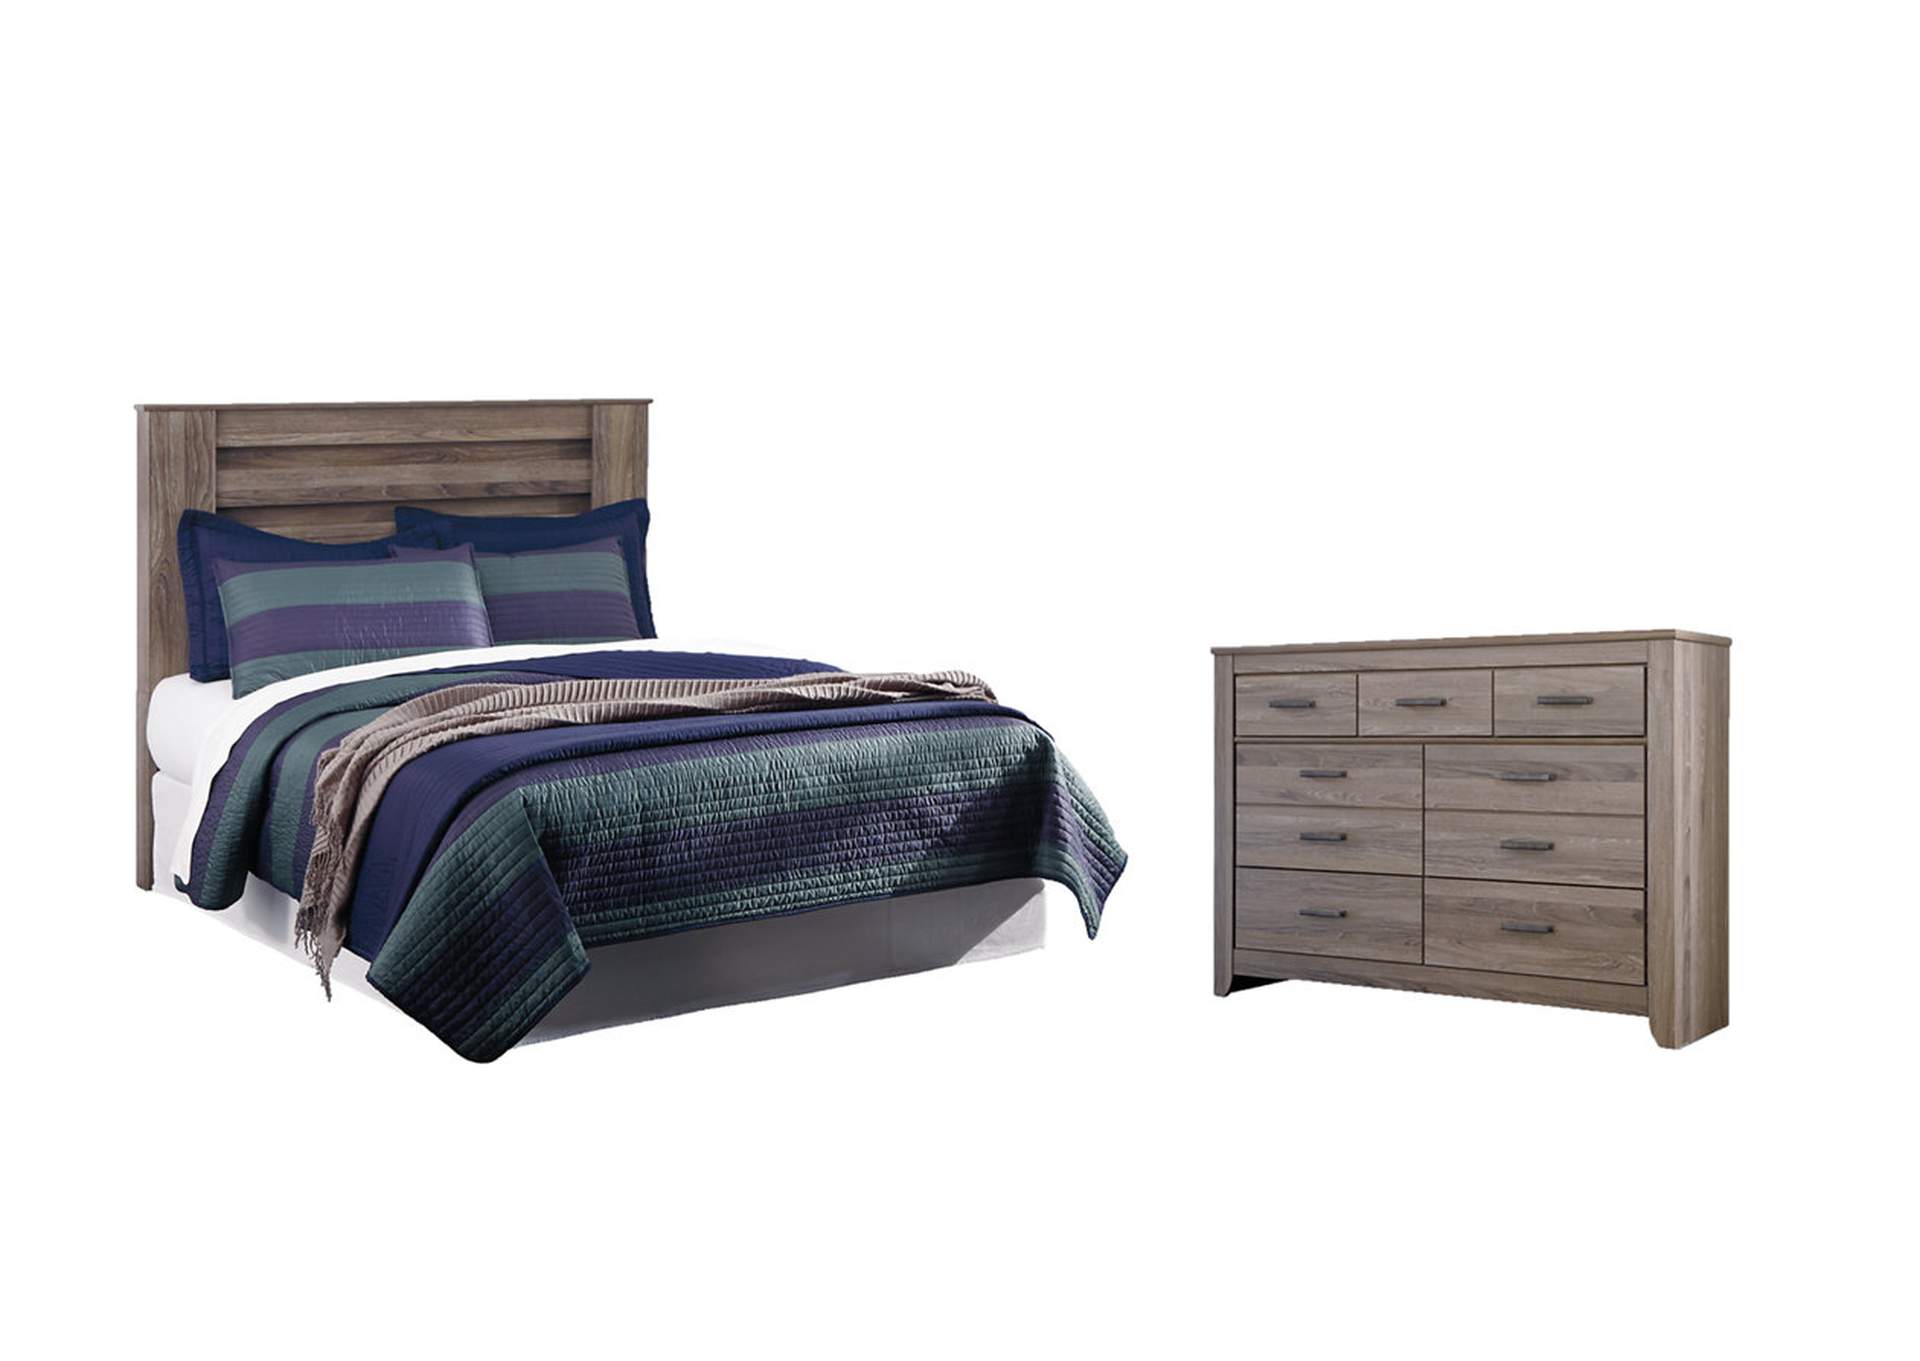 Zelen Queen/Full Panel Headboard Bed with Dresser,Signature Design By Ashley